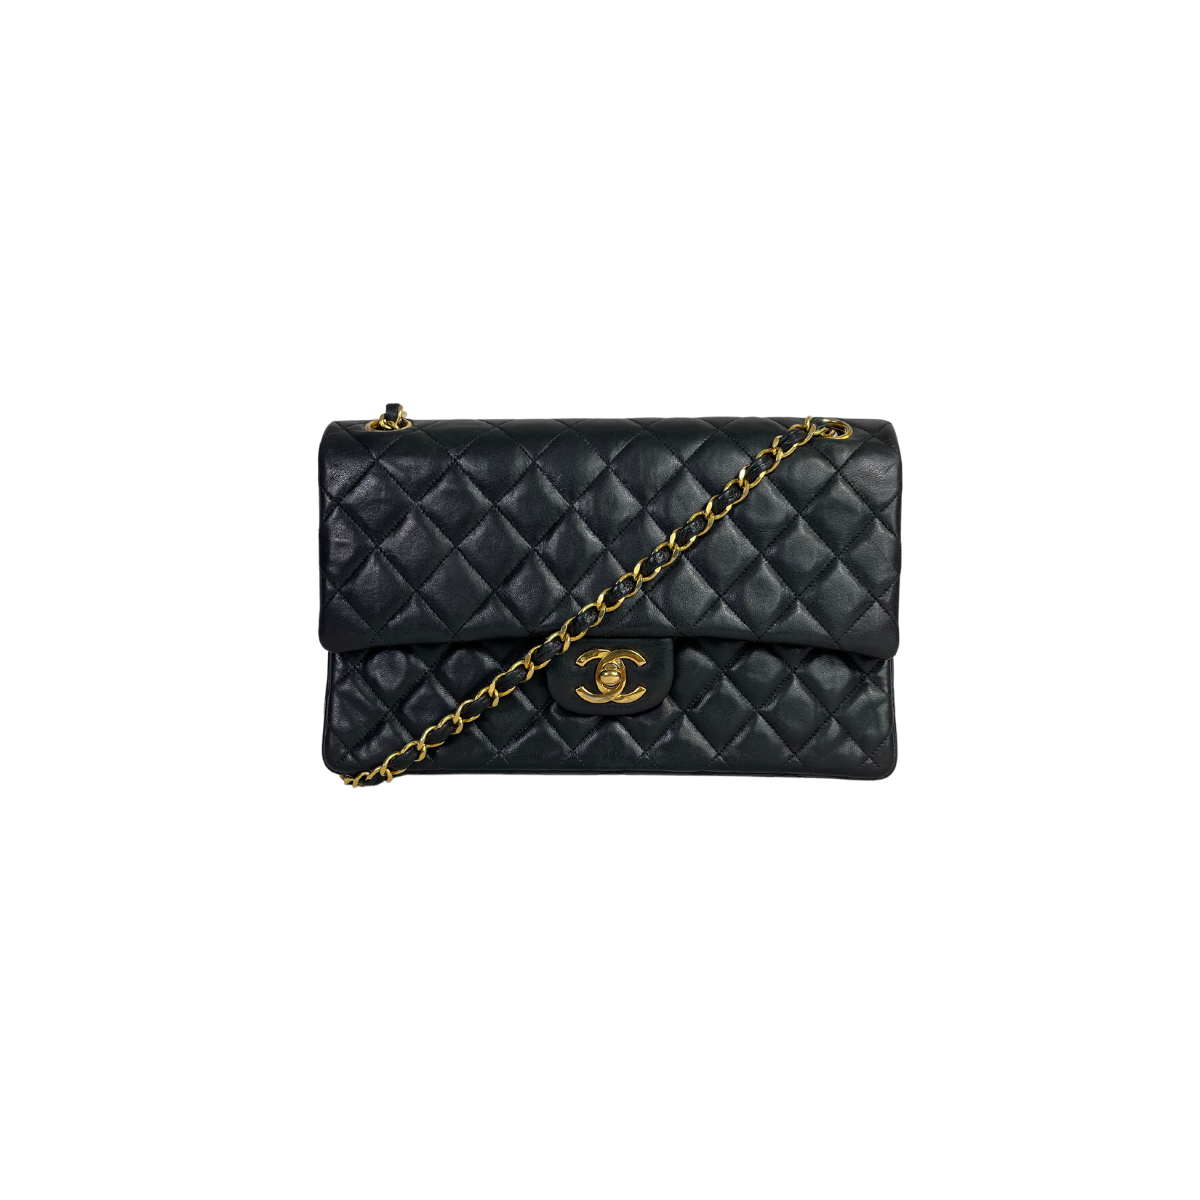 Chanel medium classic flap bag black lambskin leather, Motivi